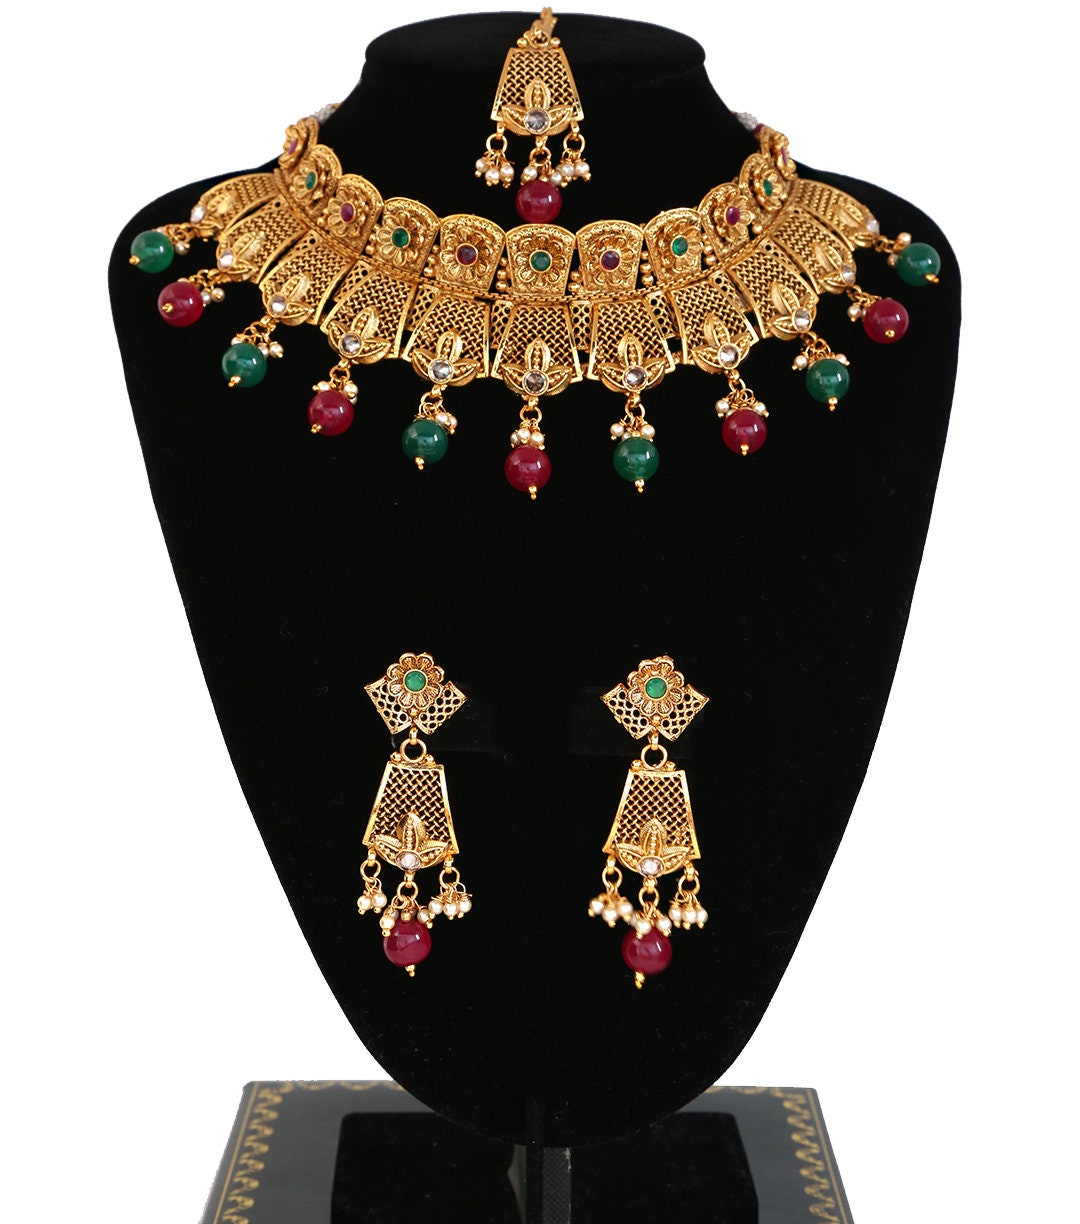 Kundan Polki Indian wedding Bridal Jewelry necklace with Matching earrings and Mang Tikka